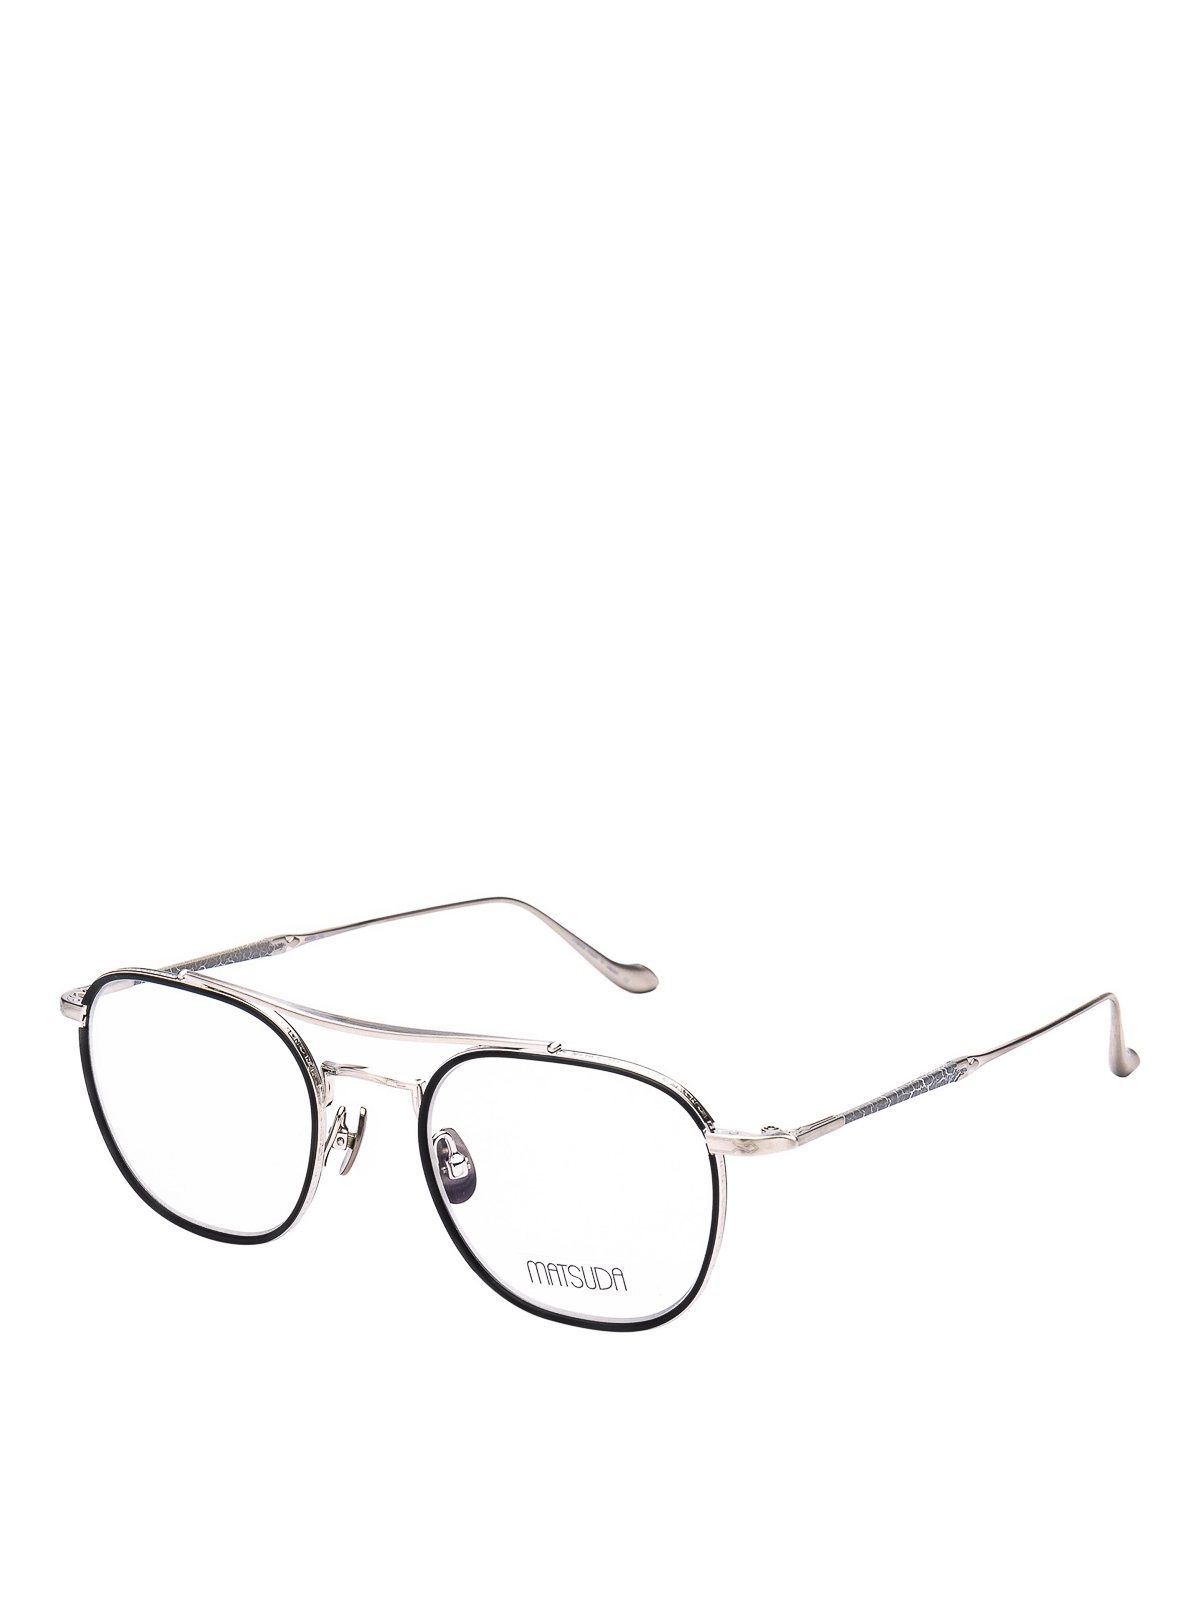 Gafas Matsuda - Gafas - Plata M3077MATTE | tienda online